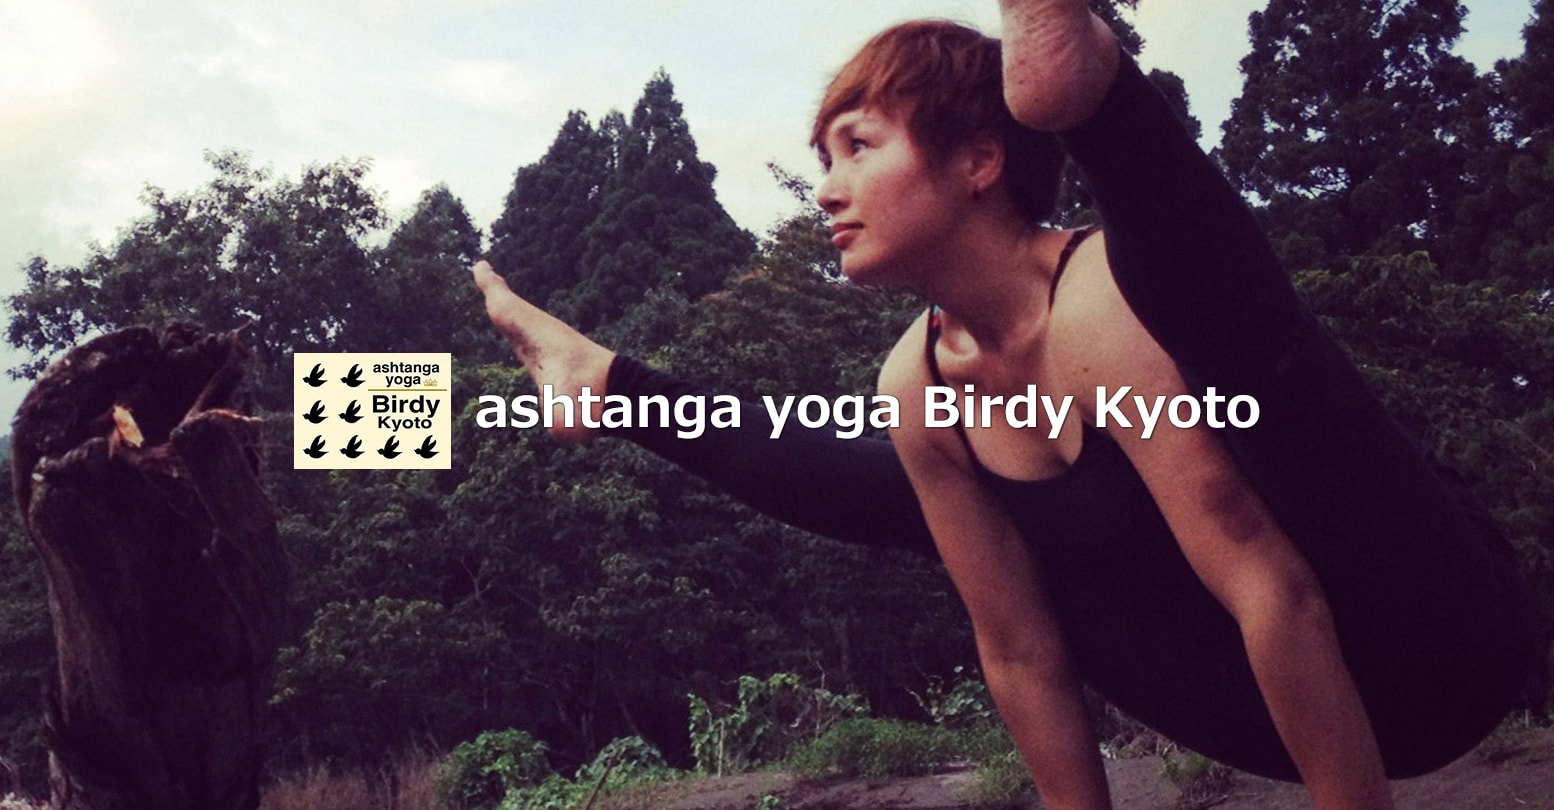 About ashtanga yoga